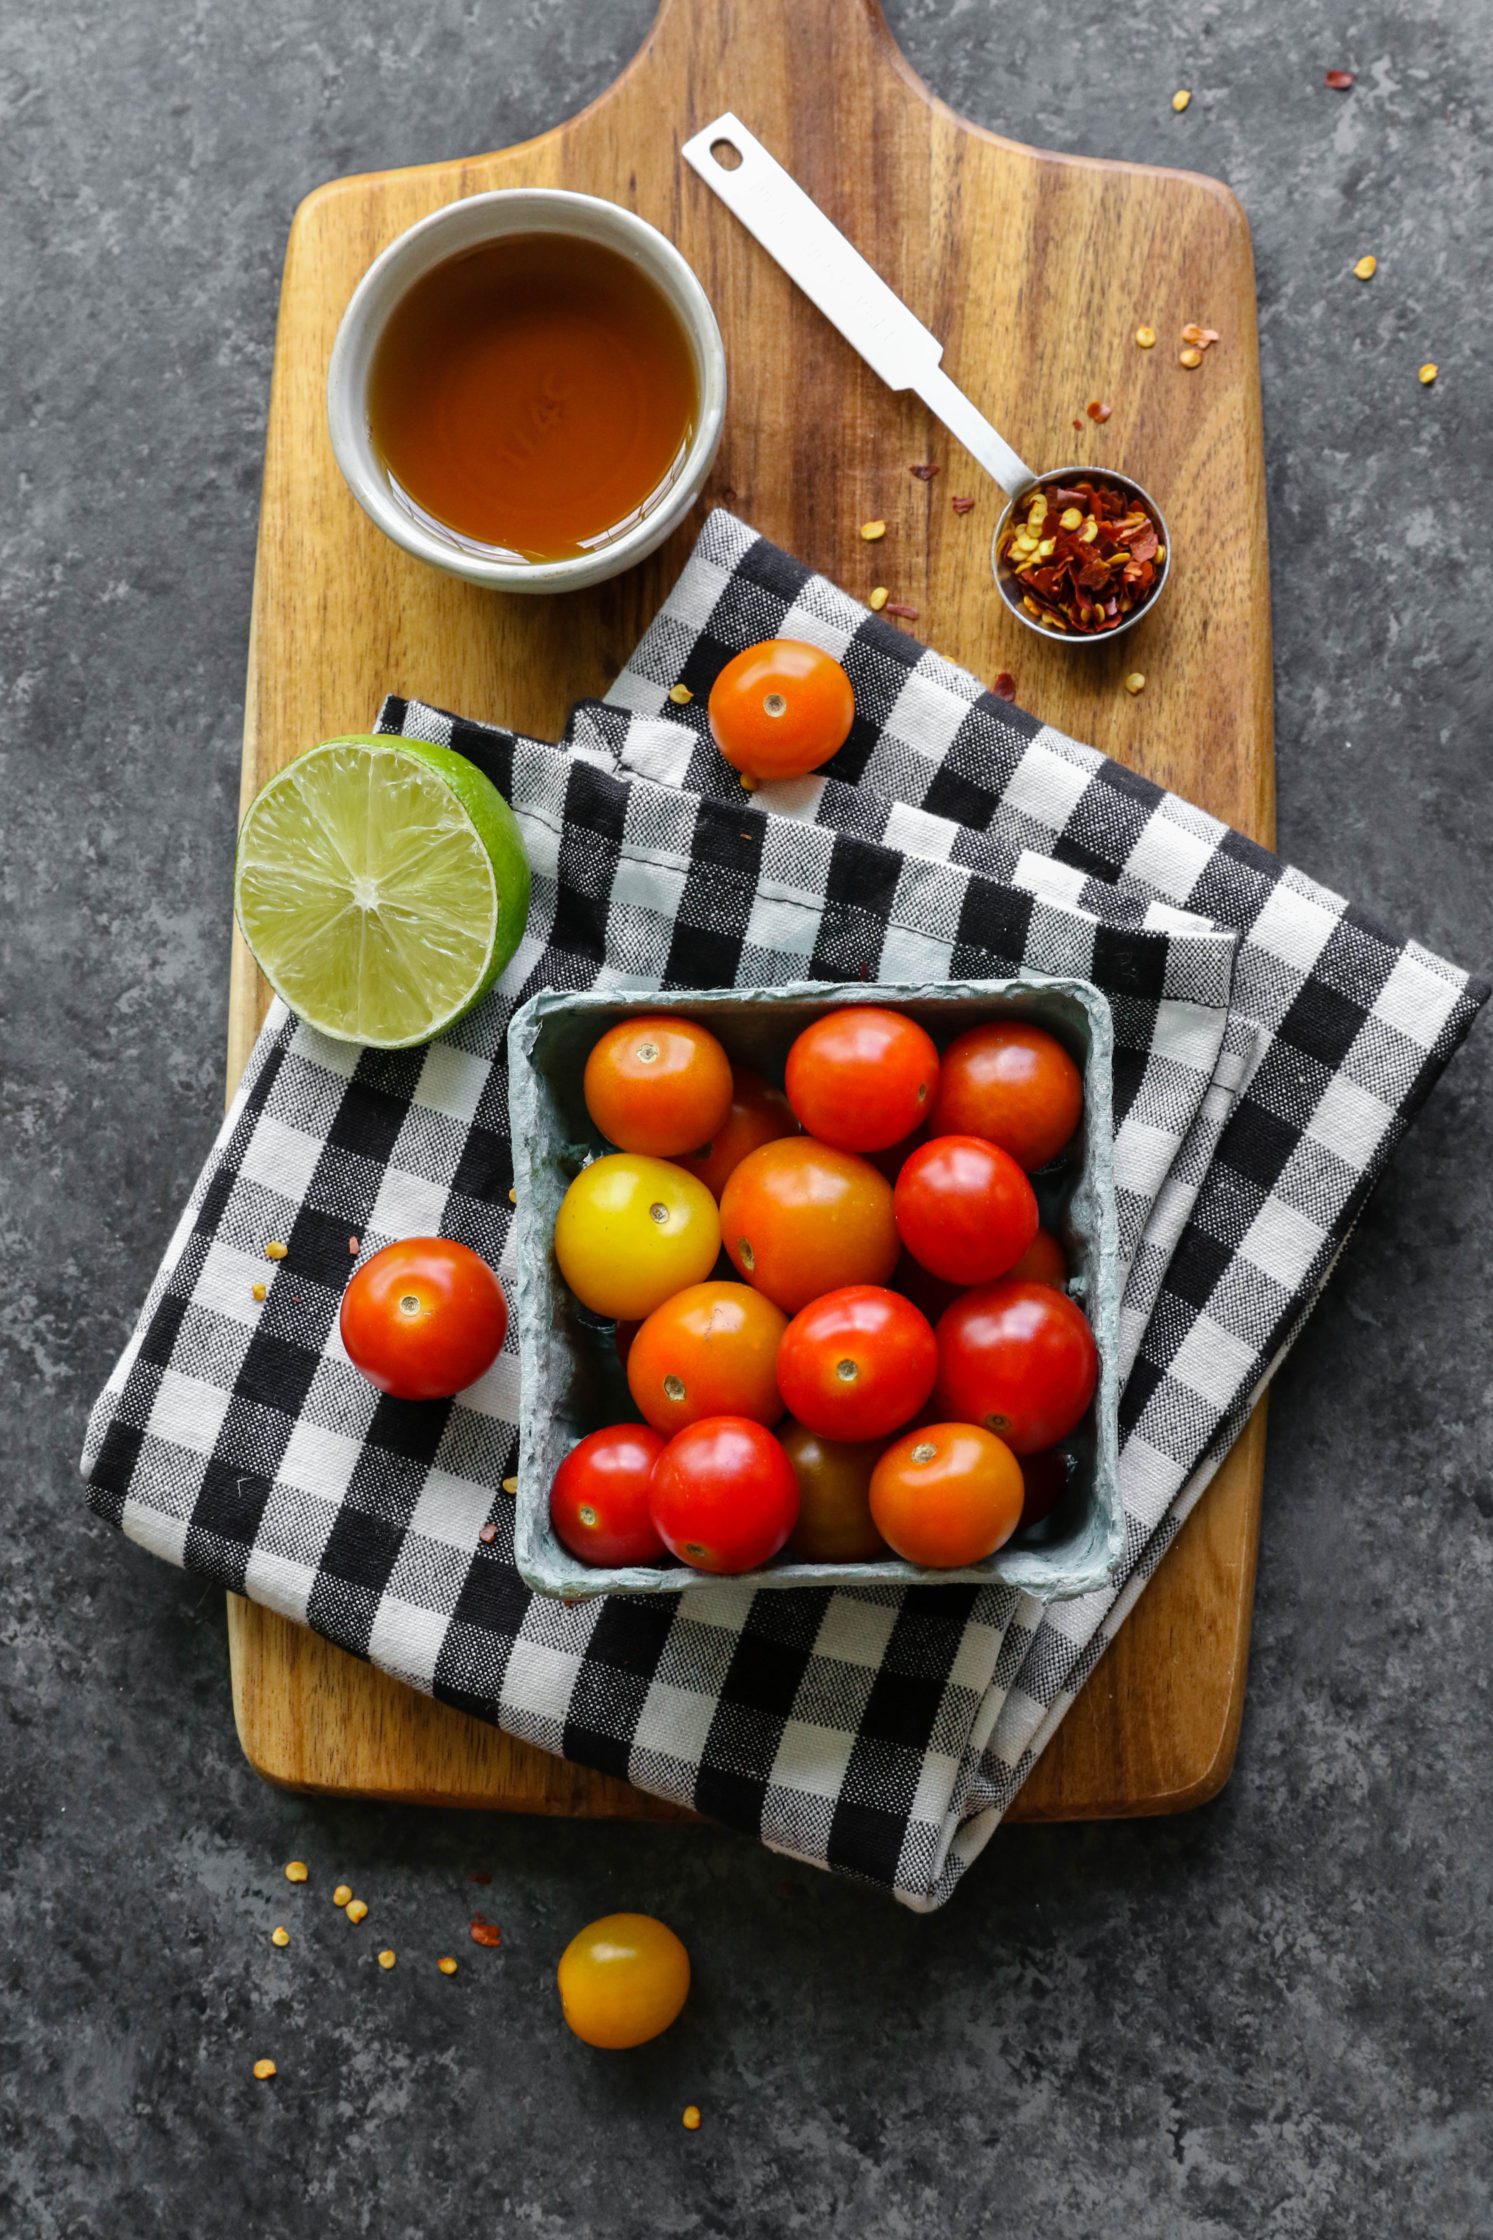 Sweet & Spicy Tomato Jam ingredients